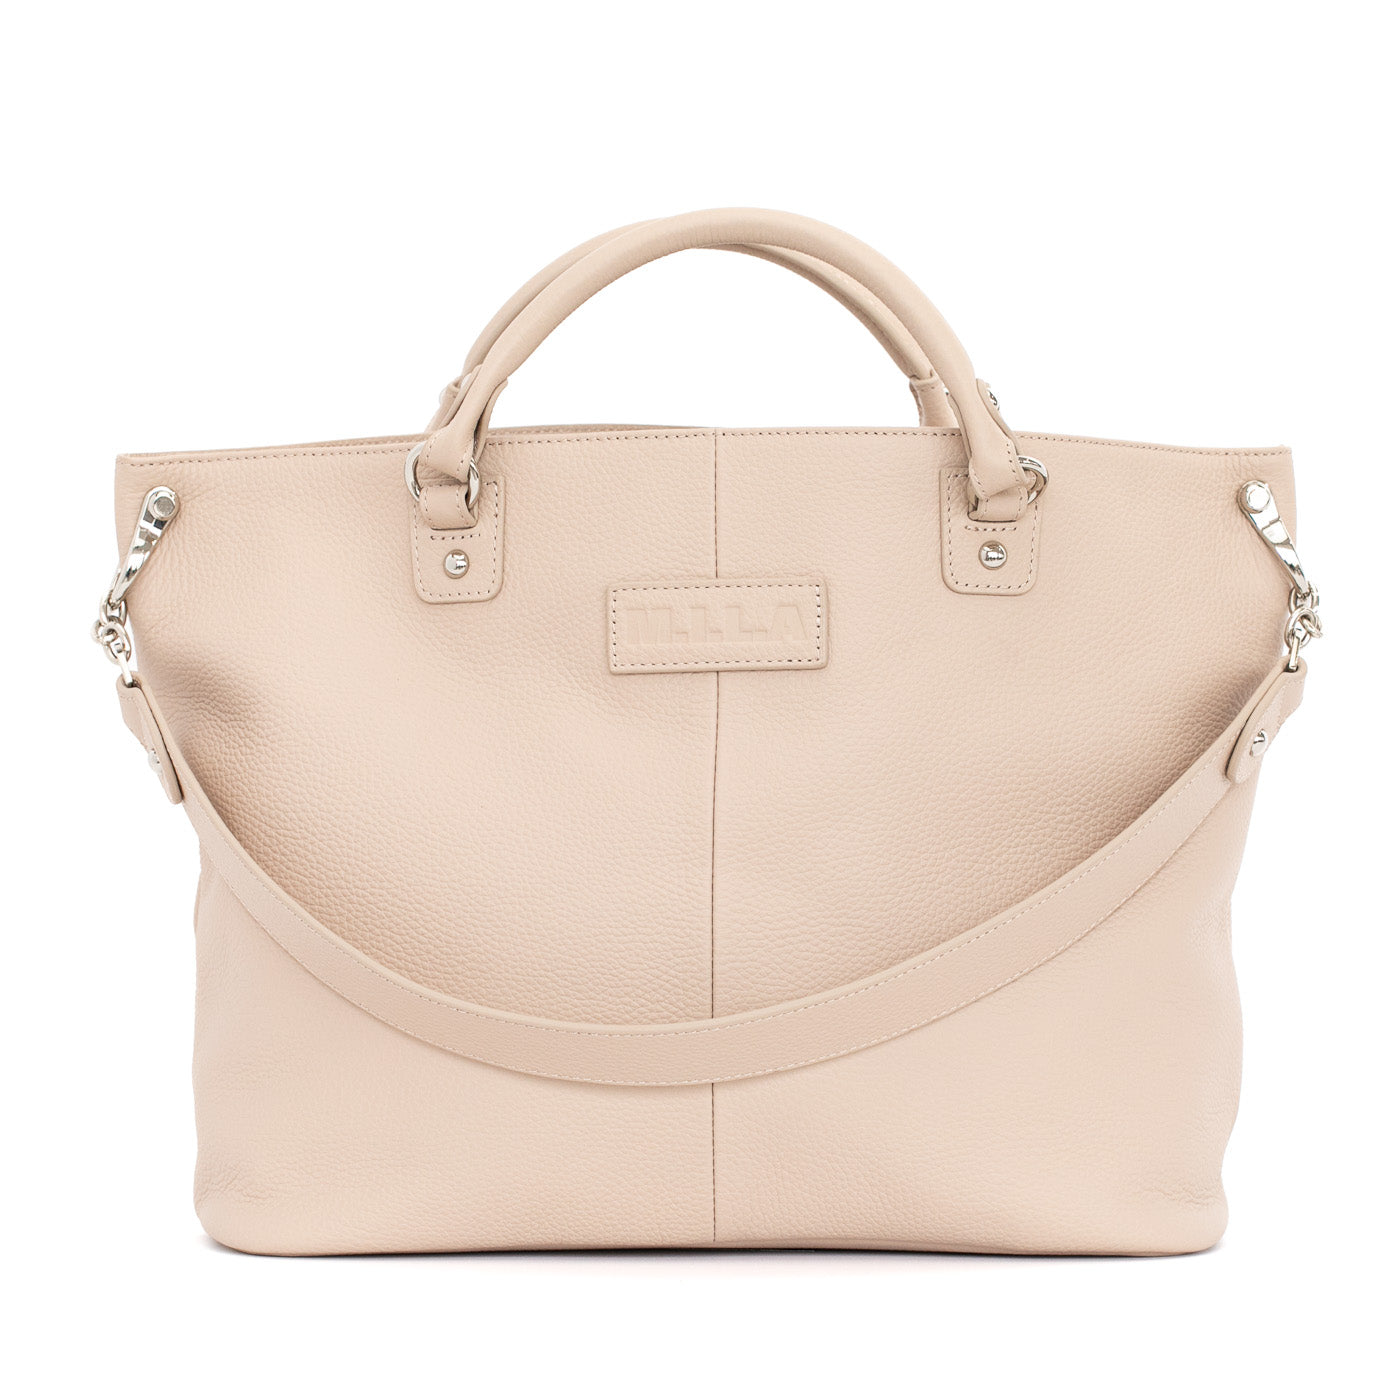 Buy Accessorize London women's Faux Leather Chloe Cream Handbag at Amazon.in